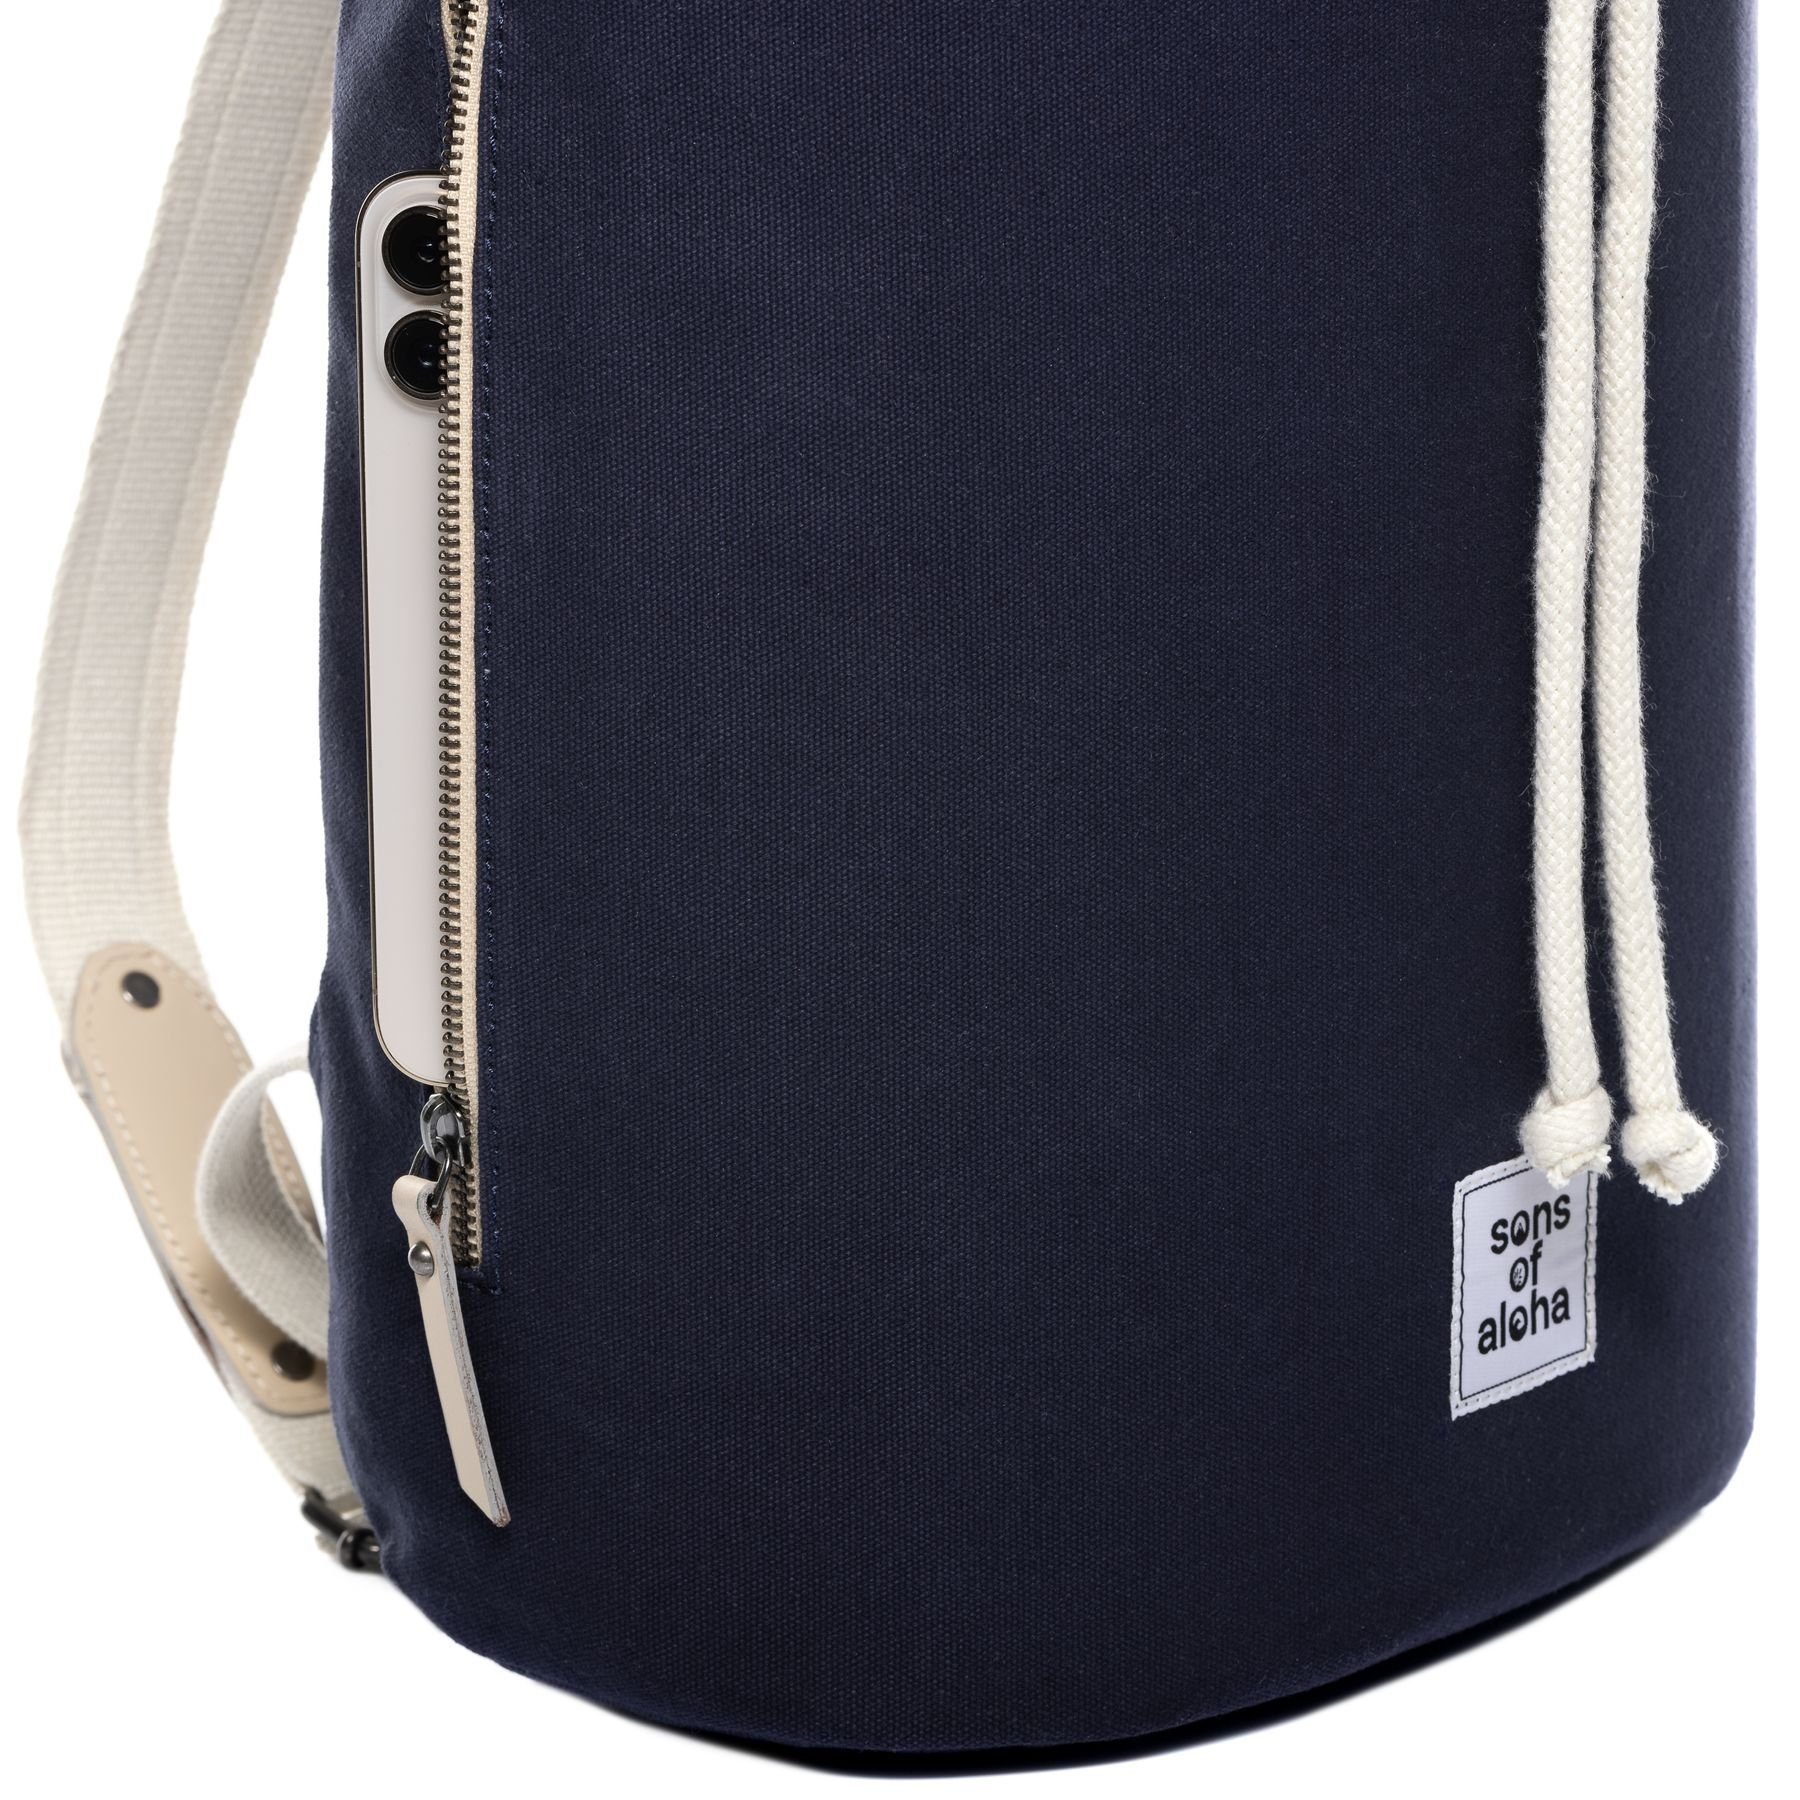 SONS OF ALOHA Rucksack »MALU«, Backpack Baumwolle handgefertigt Canvas blau Seesack Matchsack und groß aus